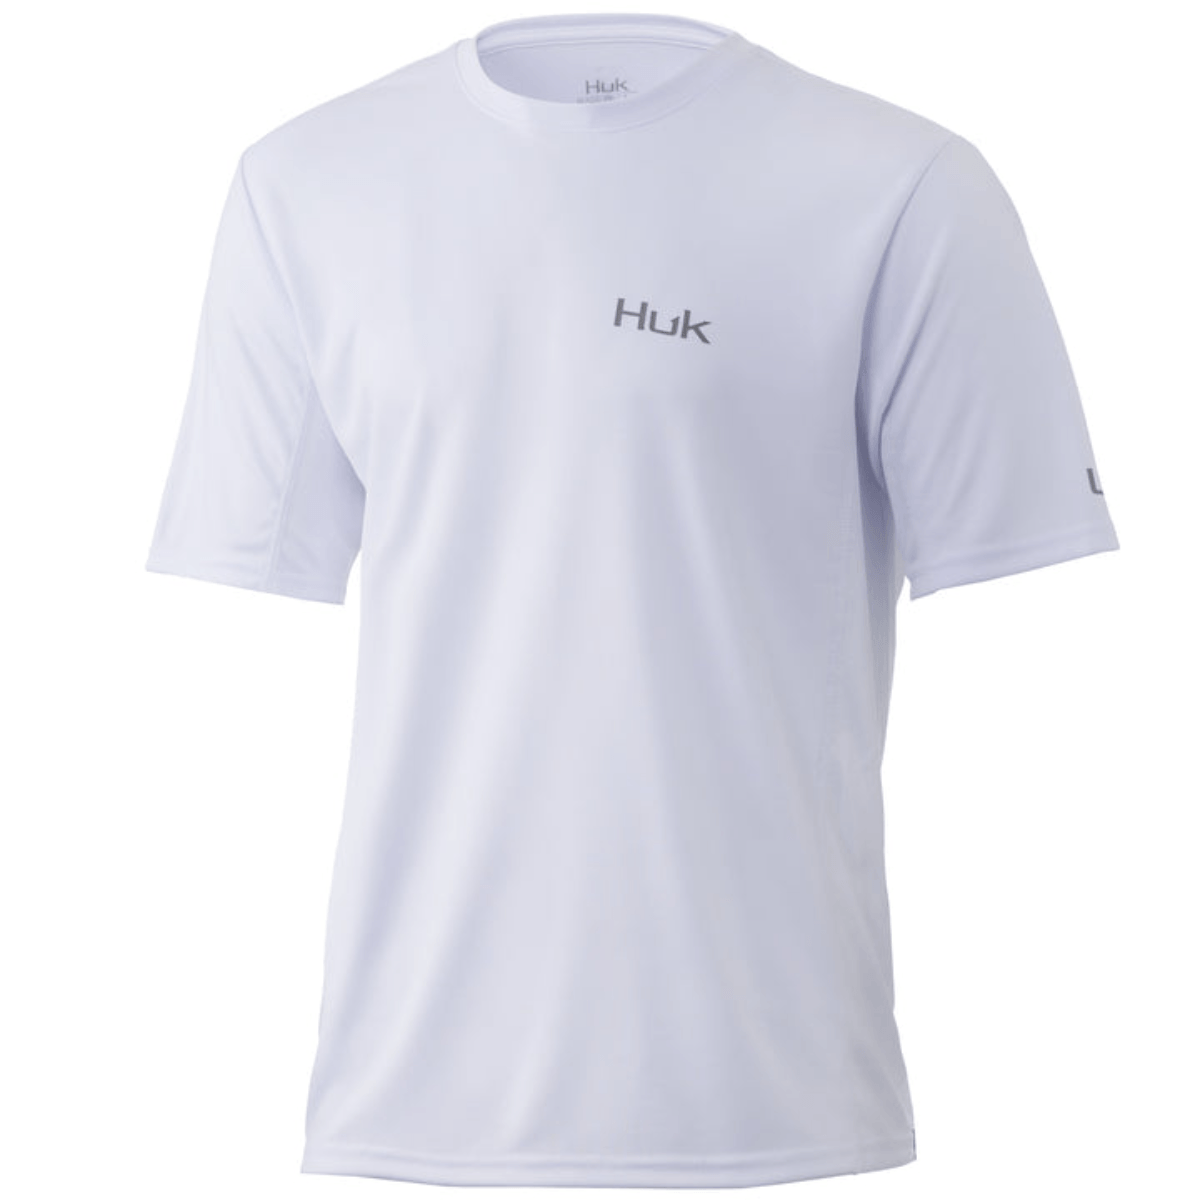 Huk Icon X Short-Sleeve T-Shirt - Men's